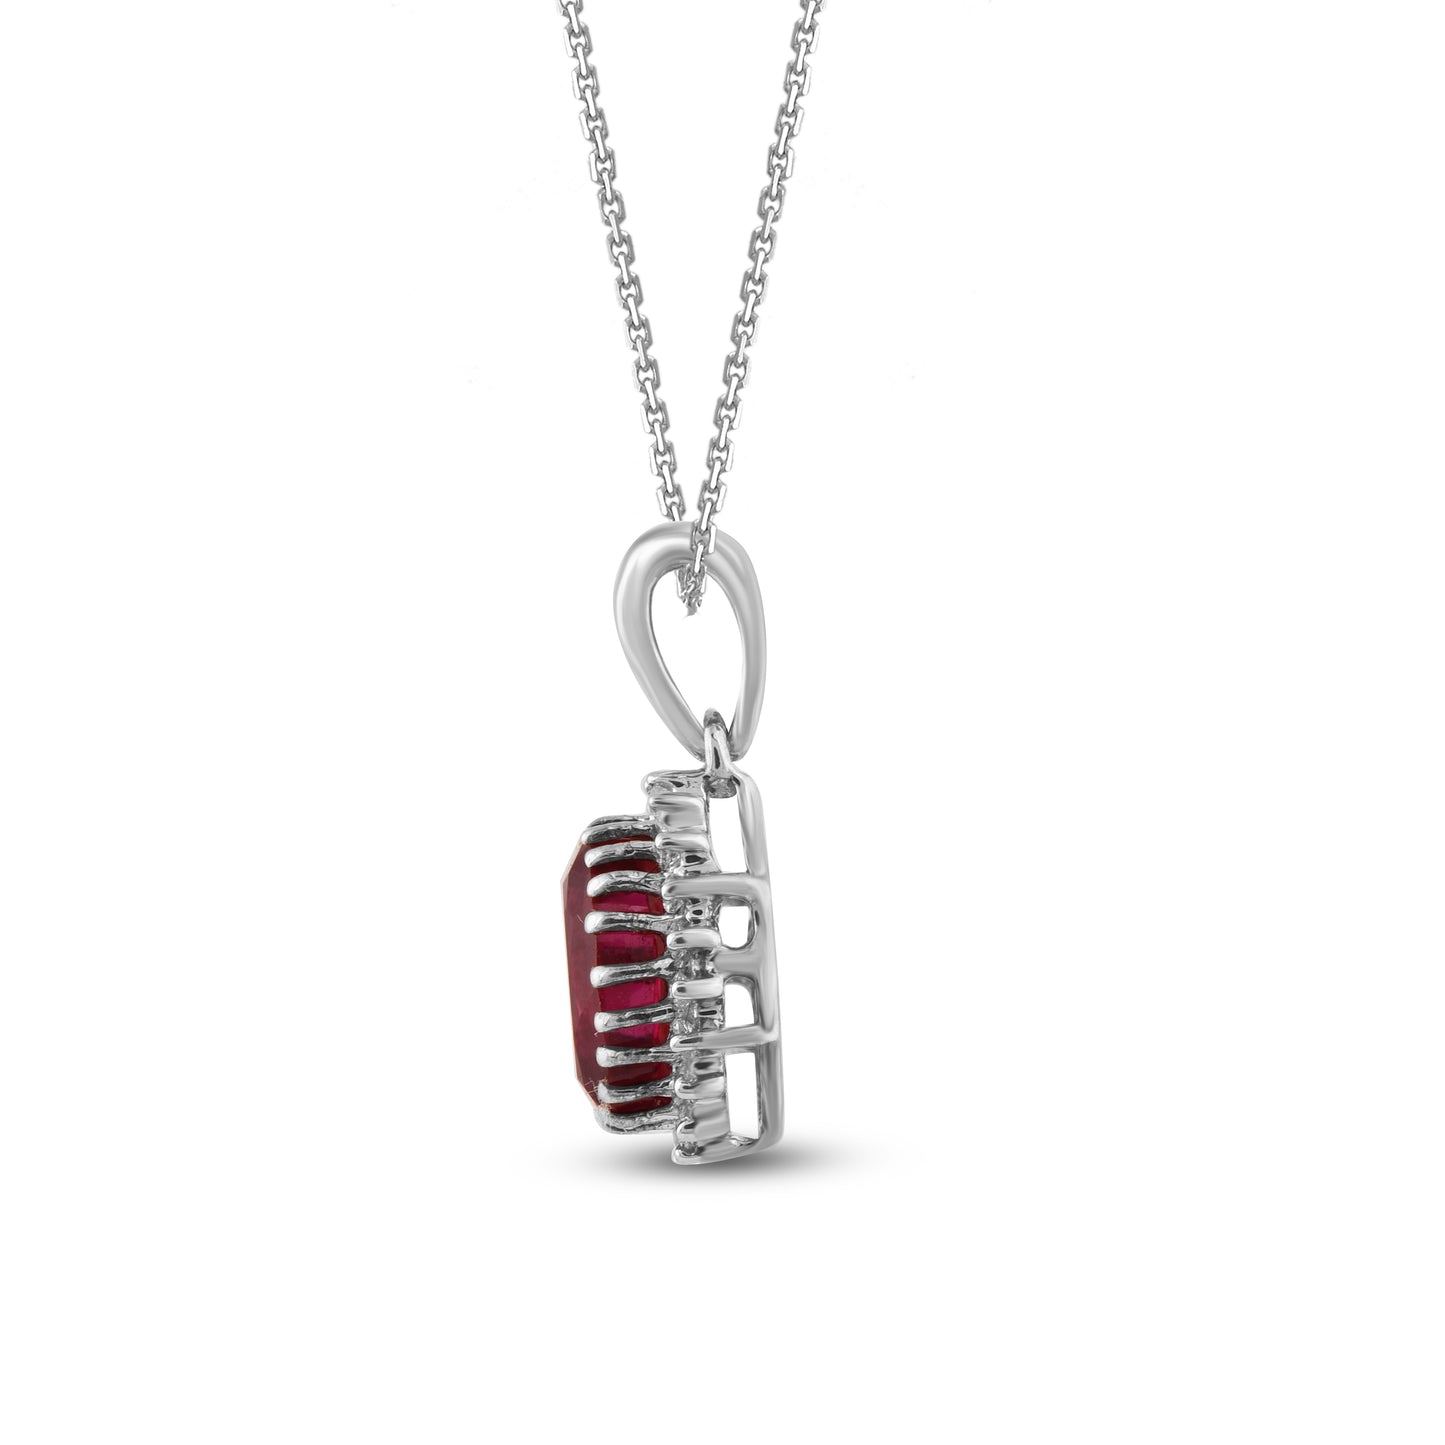 oval ruby pendant necklace